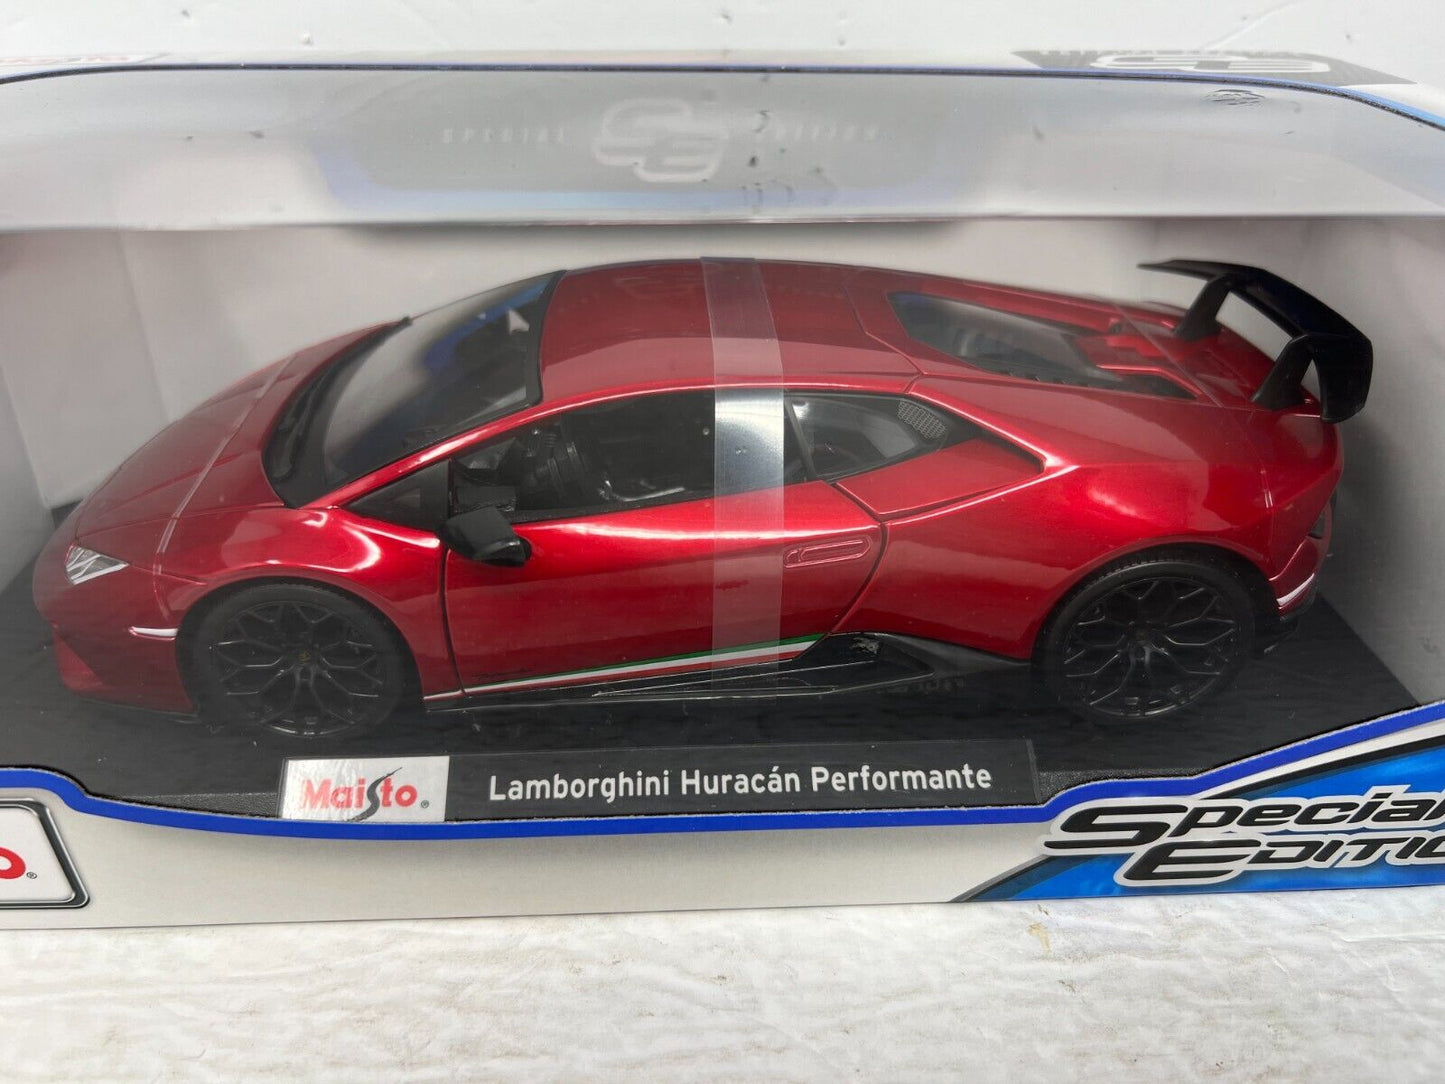 Maisto Lamborghini Huracan Performante Special Edition 1:18 Diecast